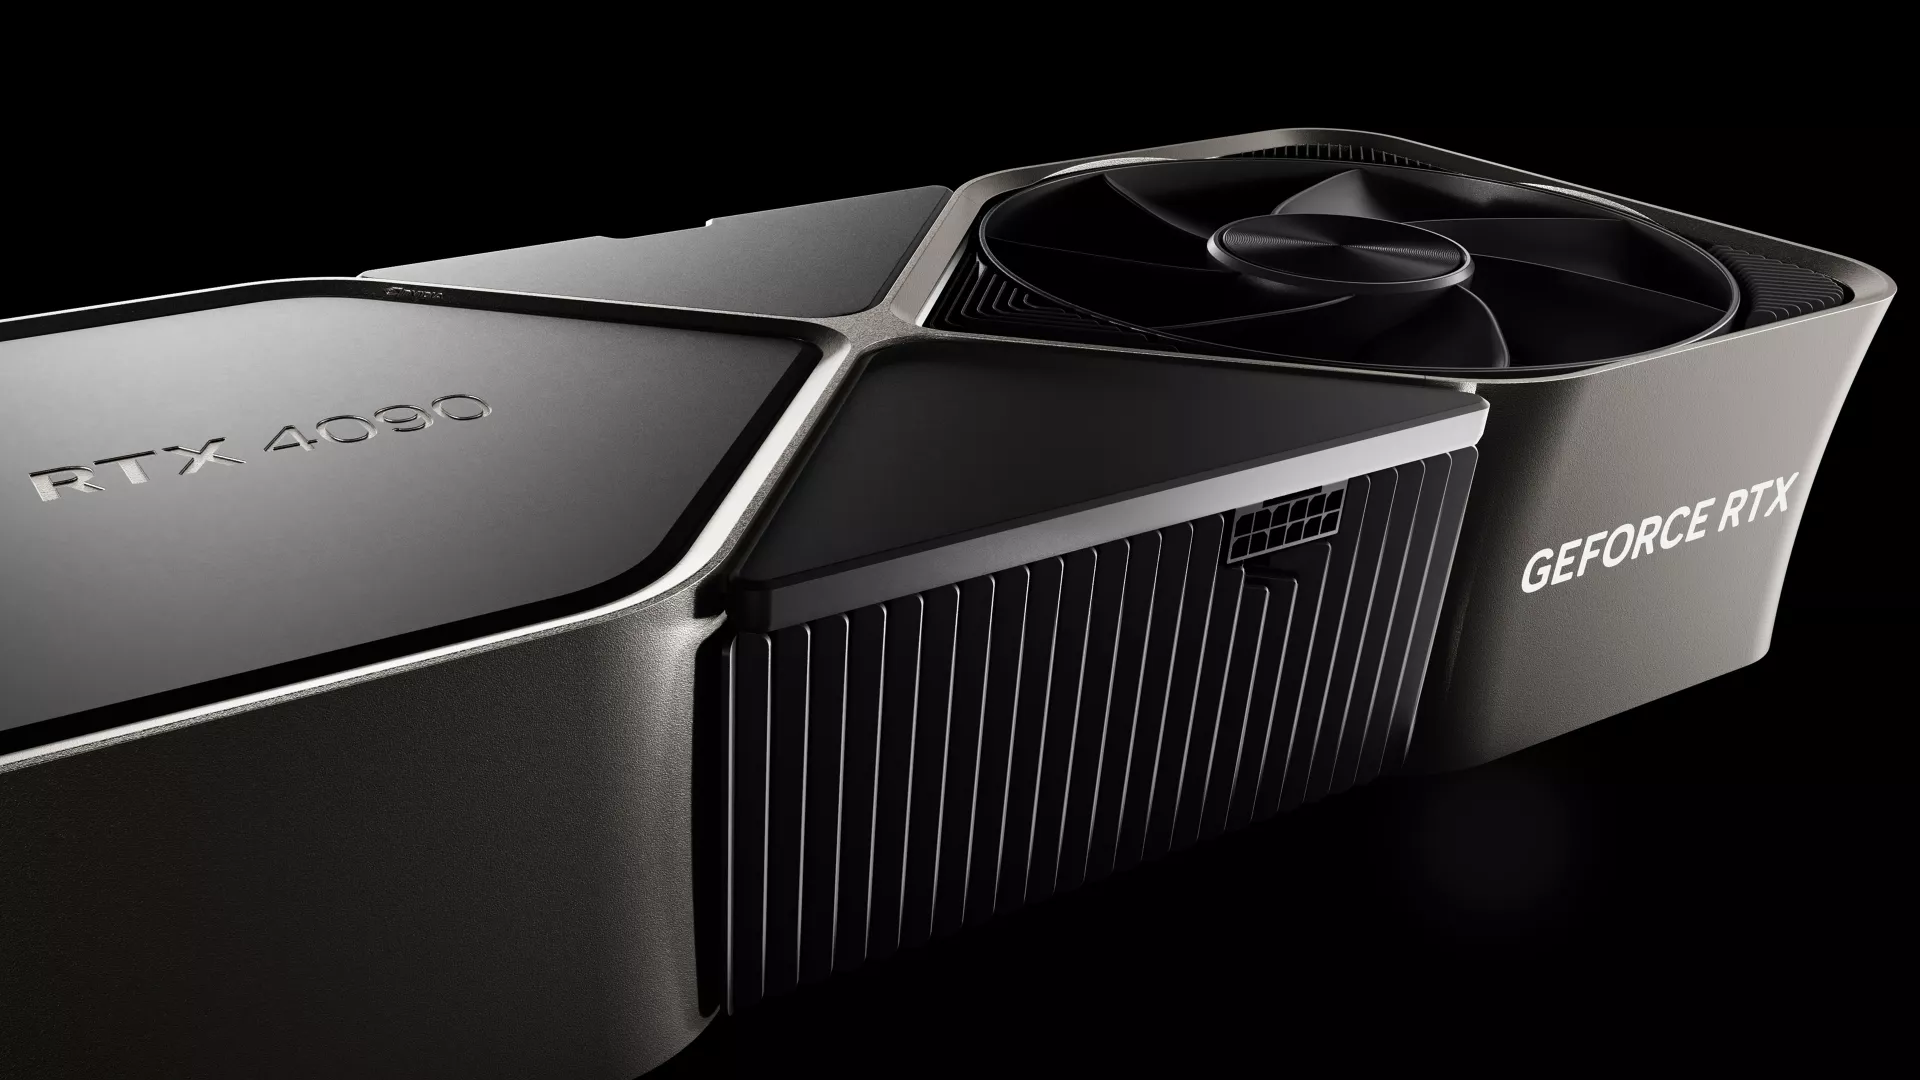 H Nvidia ξεκαθαρίζει το τοπίο σχετικά με τη συμβατότητα της GeForce RTX 40-series με τα τροφοδοτικά ATX 3.0 και ATX 2.0